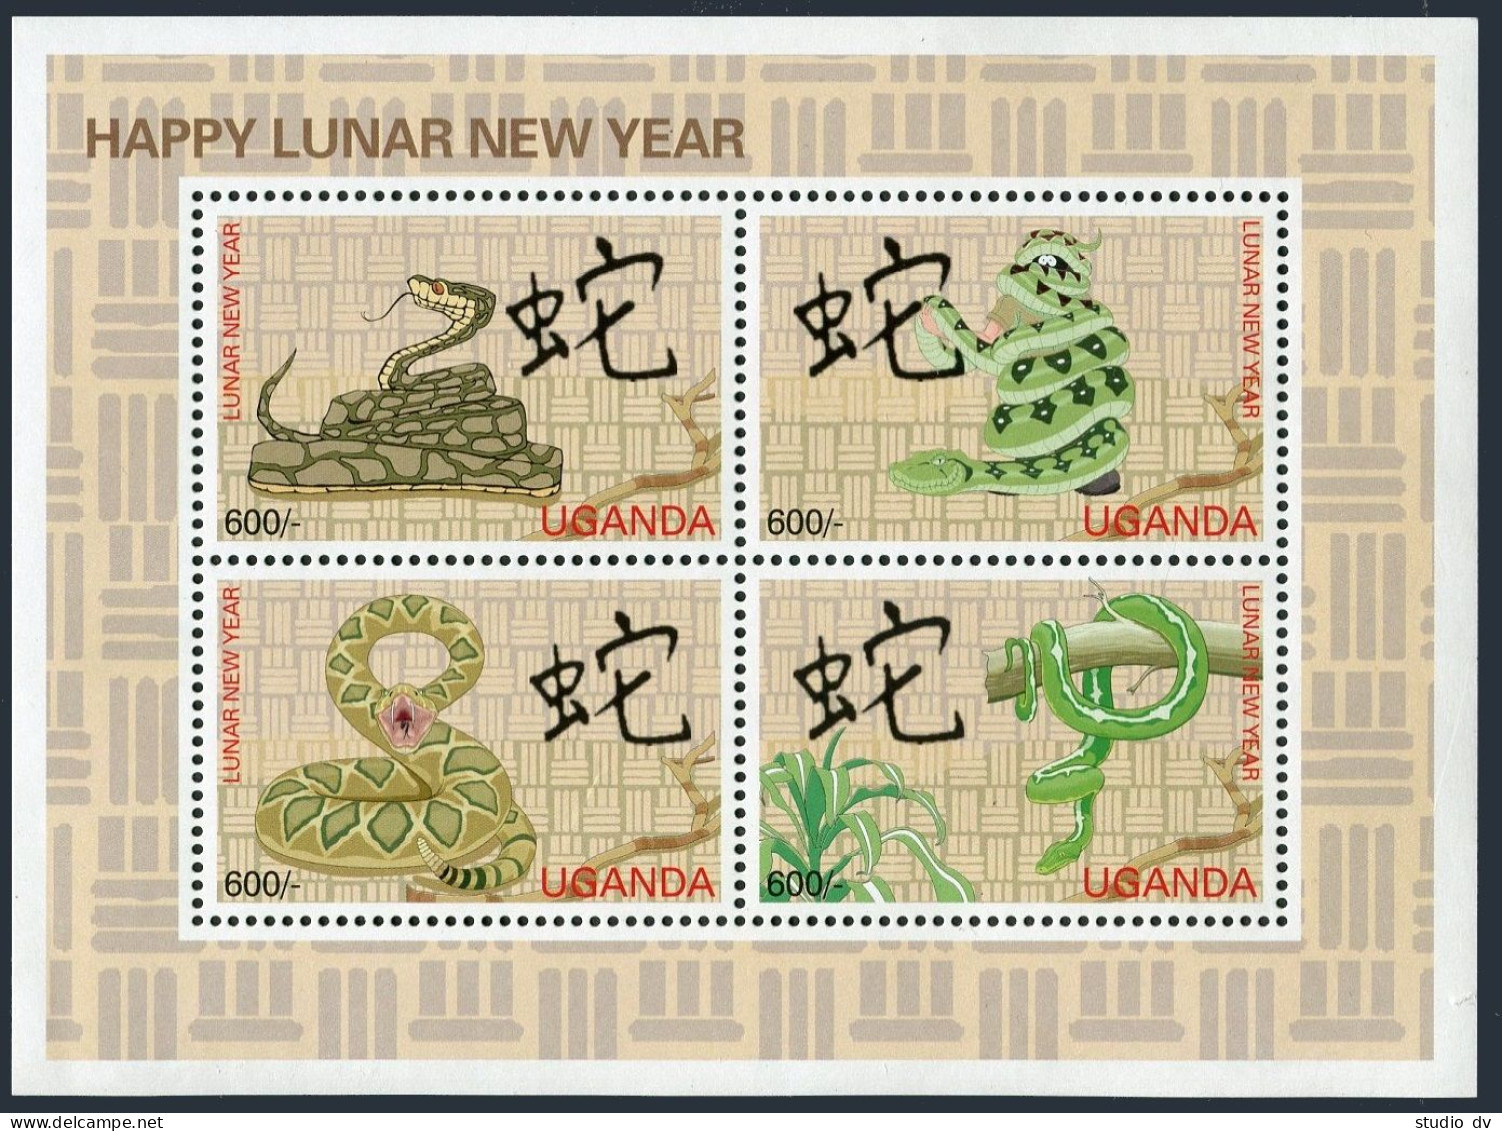 Uganda 1689 Ad,1690 Sheets,MNH. New Year 2001,Lunar Year Of The Snake. - Uganda (1962-...)